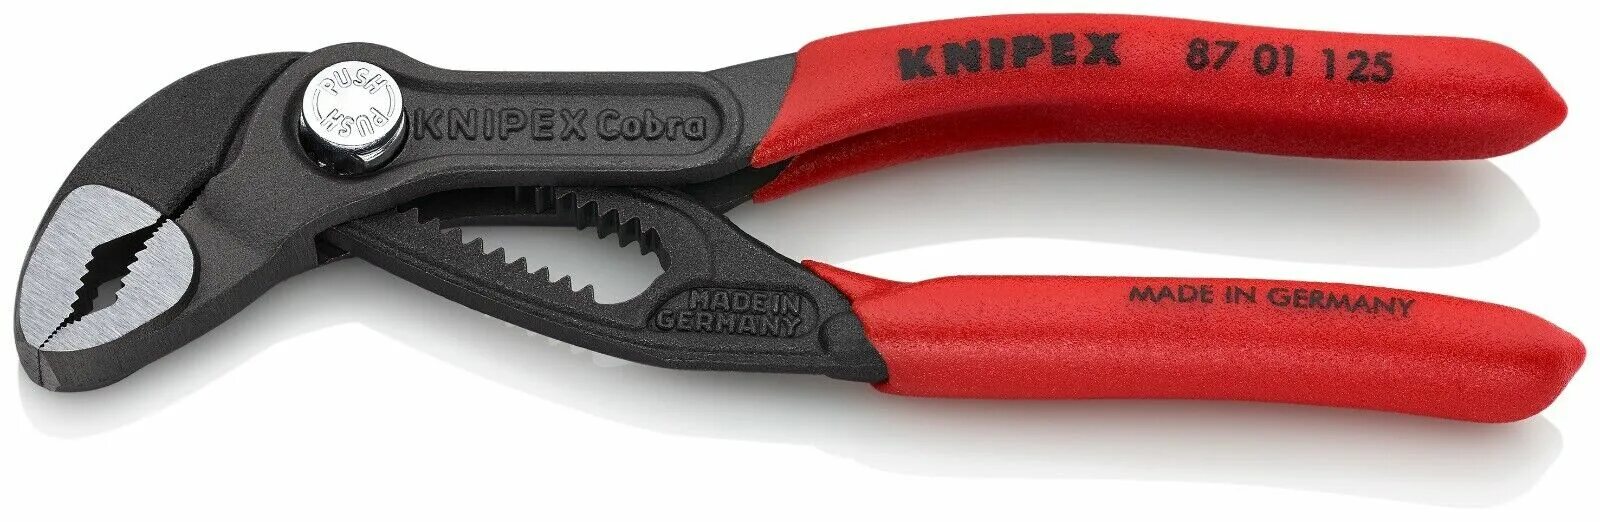 Knipex cobra купить. Клещи Knipex KN-8701125. Knipex Cobra XS сантехнические переставные клещи с фиксатором KN-8700100. Knipex 87 01 125. Knipex Cobra 125.